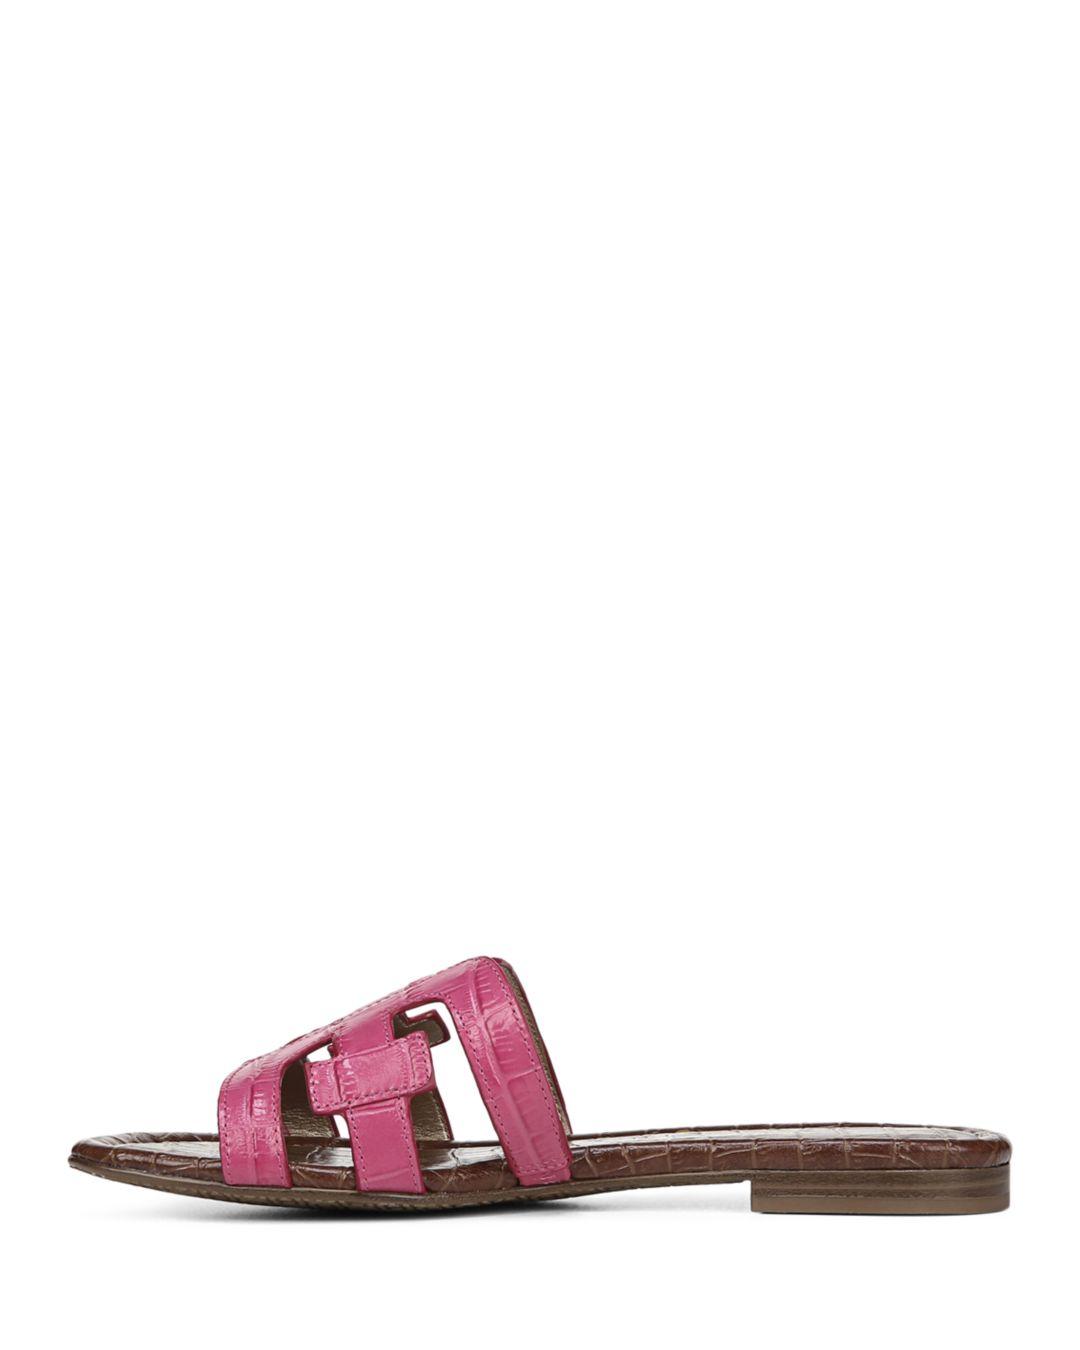 Sam Edelman Bay Embossed Cutout Slide Sandals in Pink Embossed Leather ...